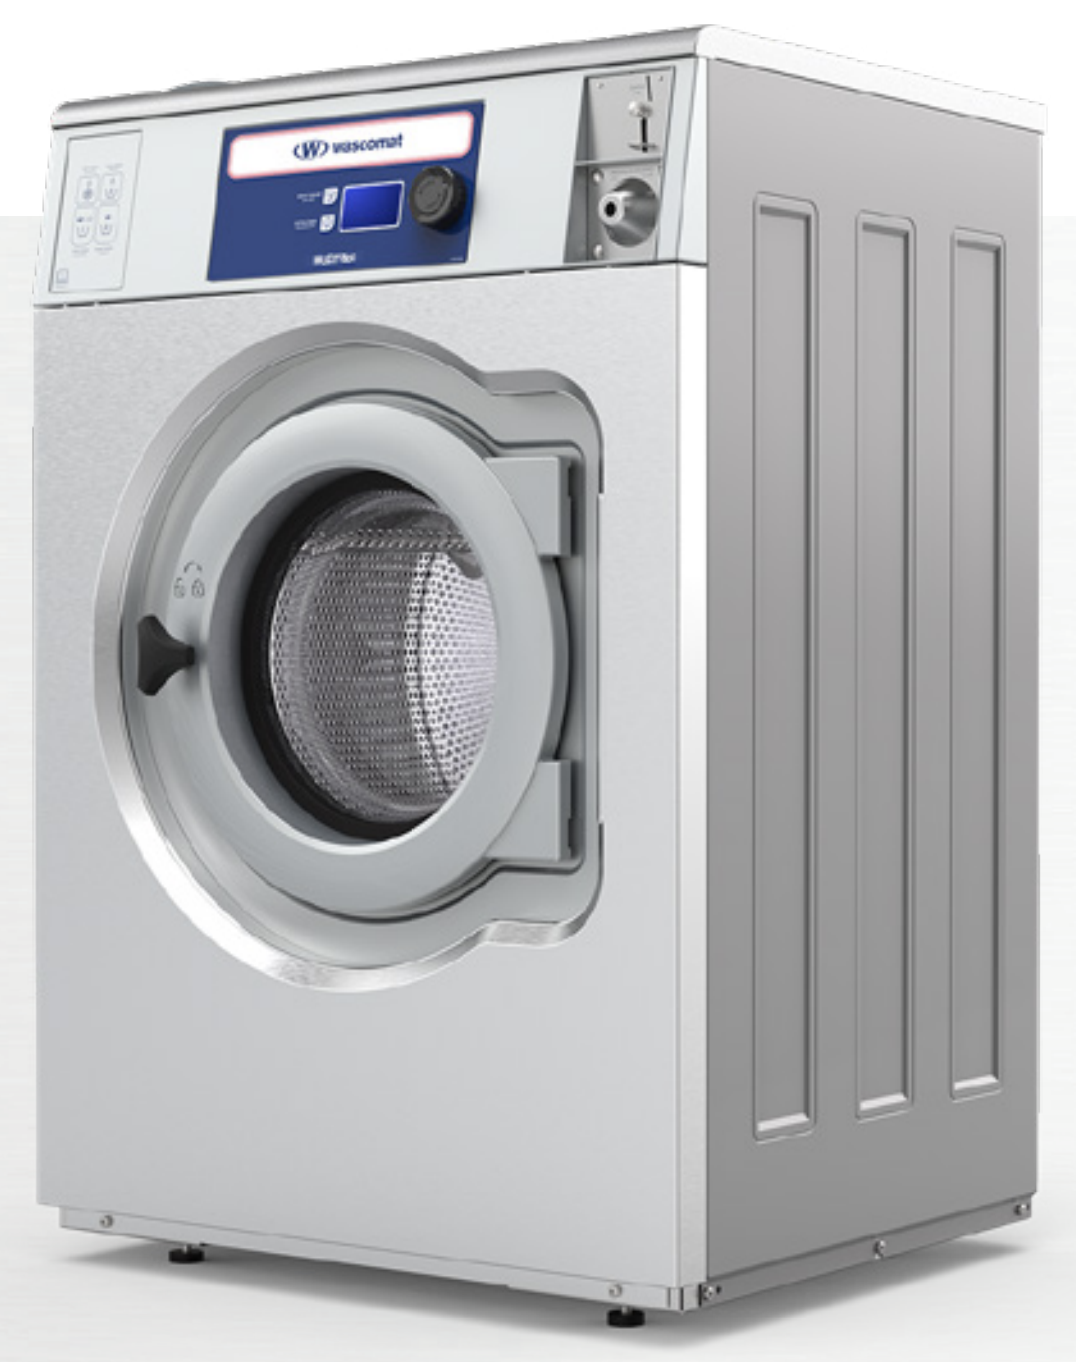 New 2022 Wascomat Wud745 - Lakeside Laundry Equipment